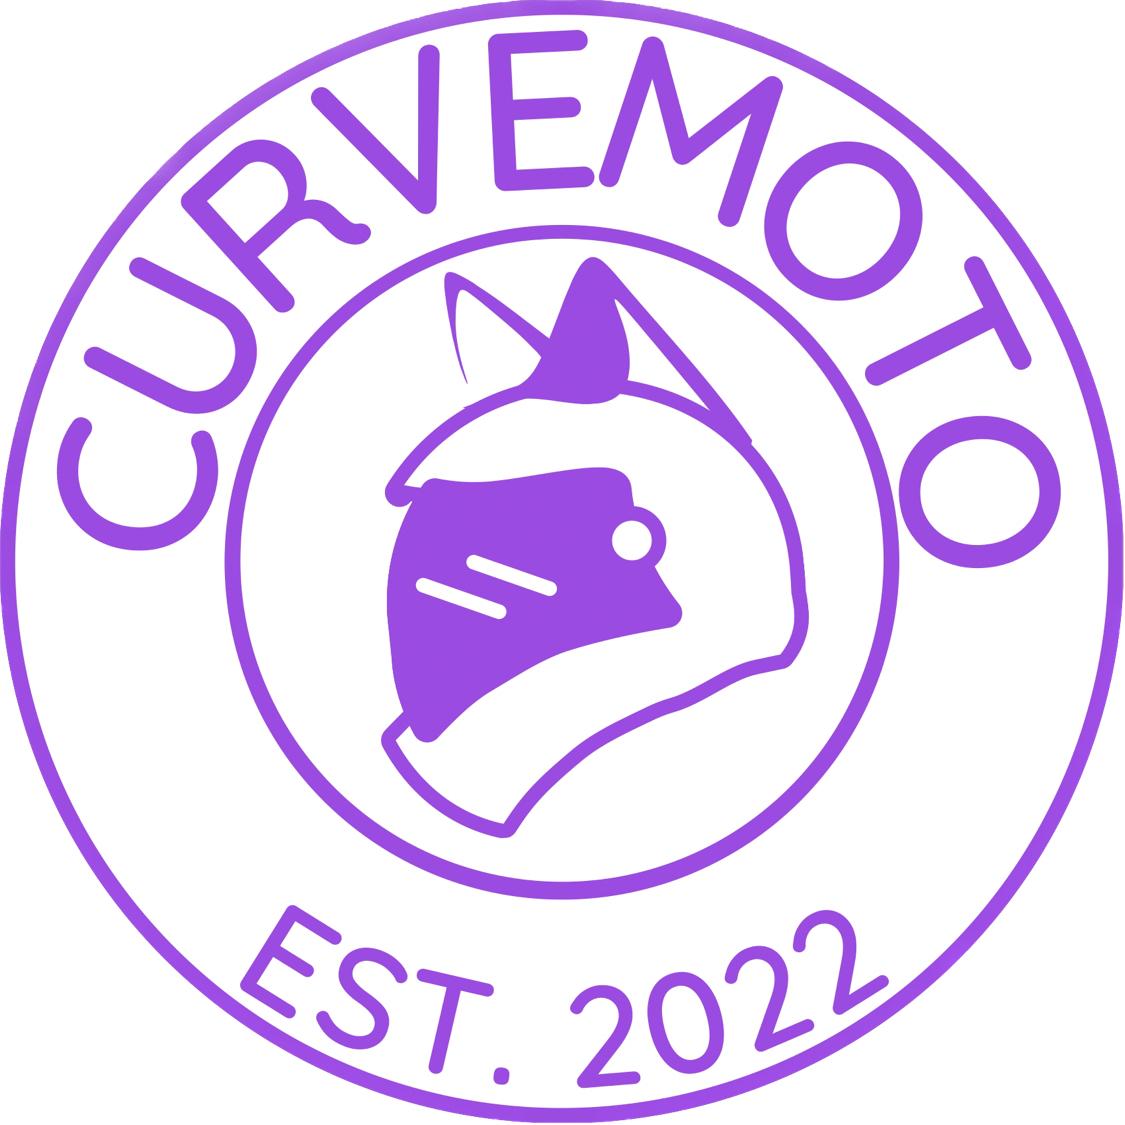 curvemoto's images